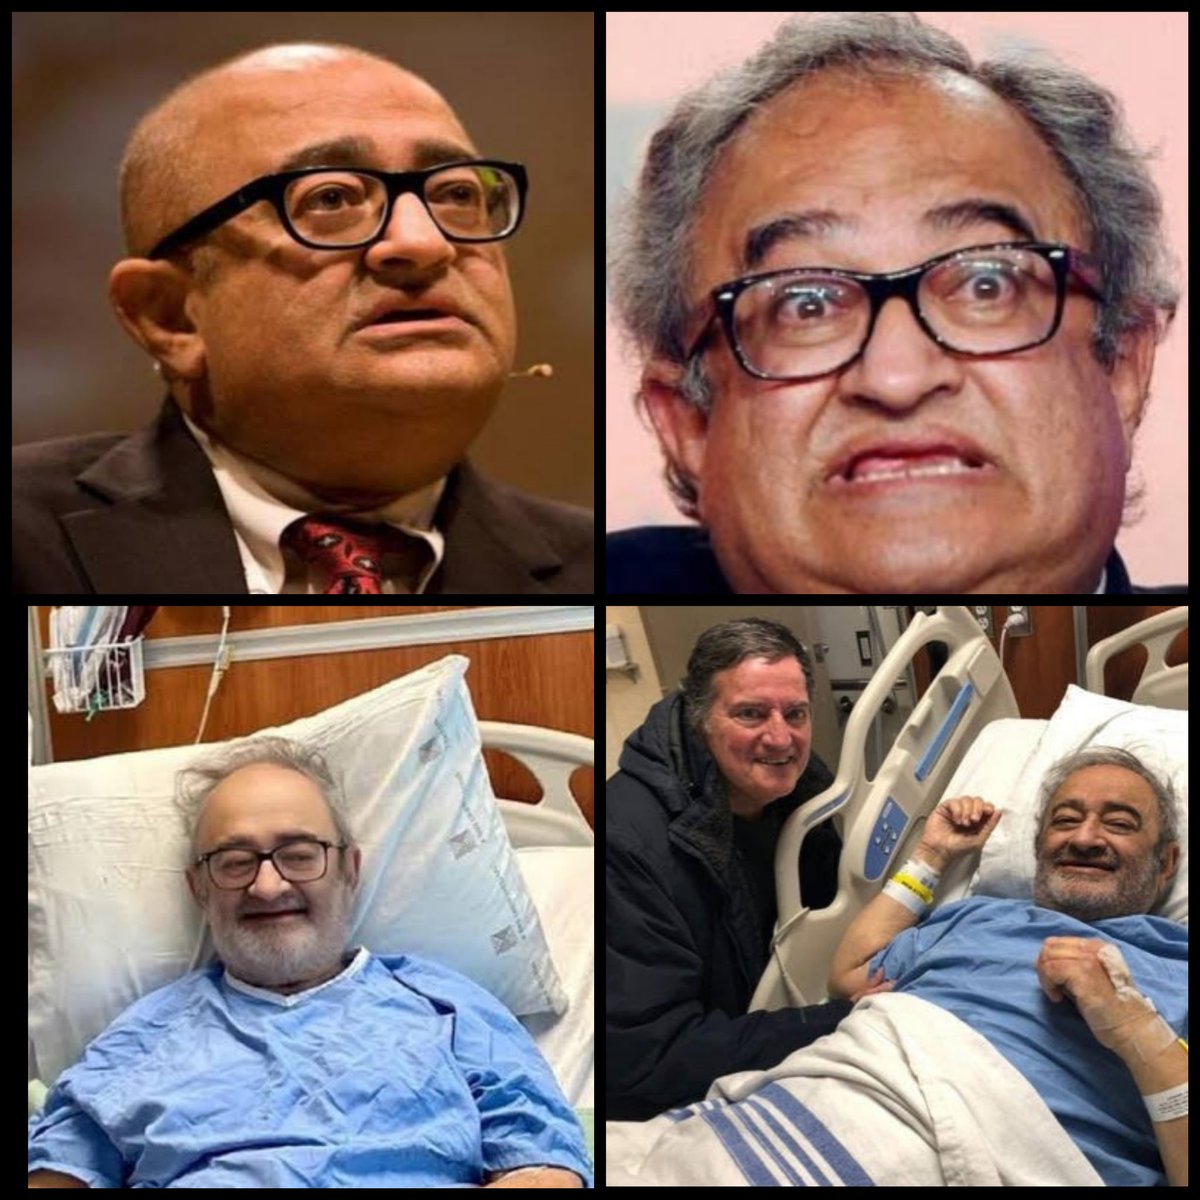 AakhirKhaar HospitalBed Par Bimaari se Maaaar hi gaaya TarekFatah

PakistaanBorn author TarekFatah PassesAway after ProlongedIllness

Canada based Pakistaani origin author & activist TarekFatah PassedAway on Monday, He was 73